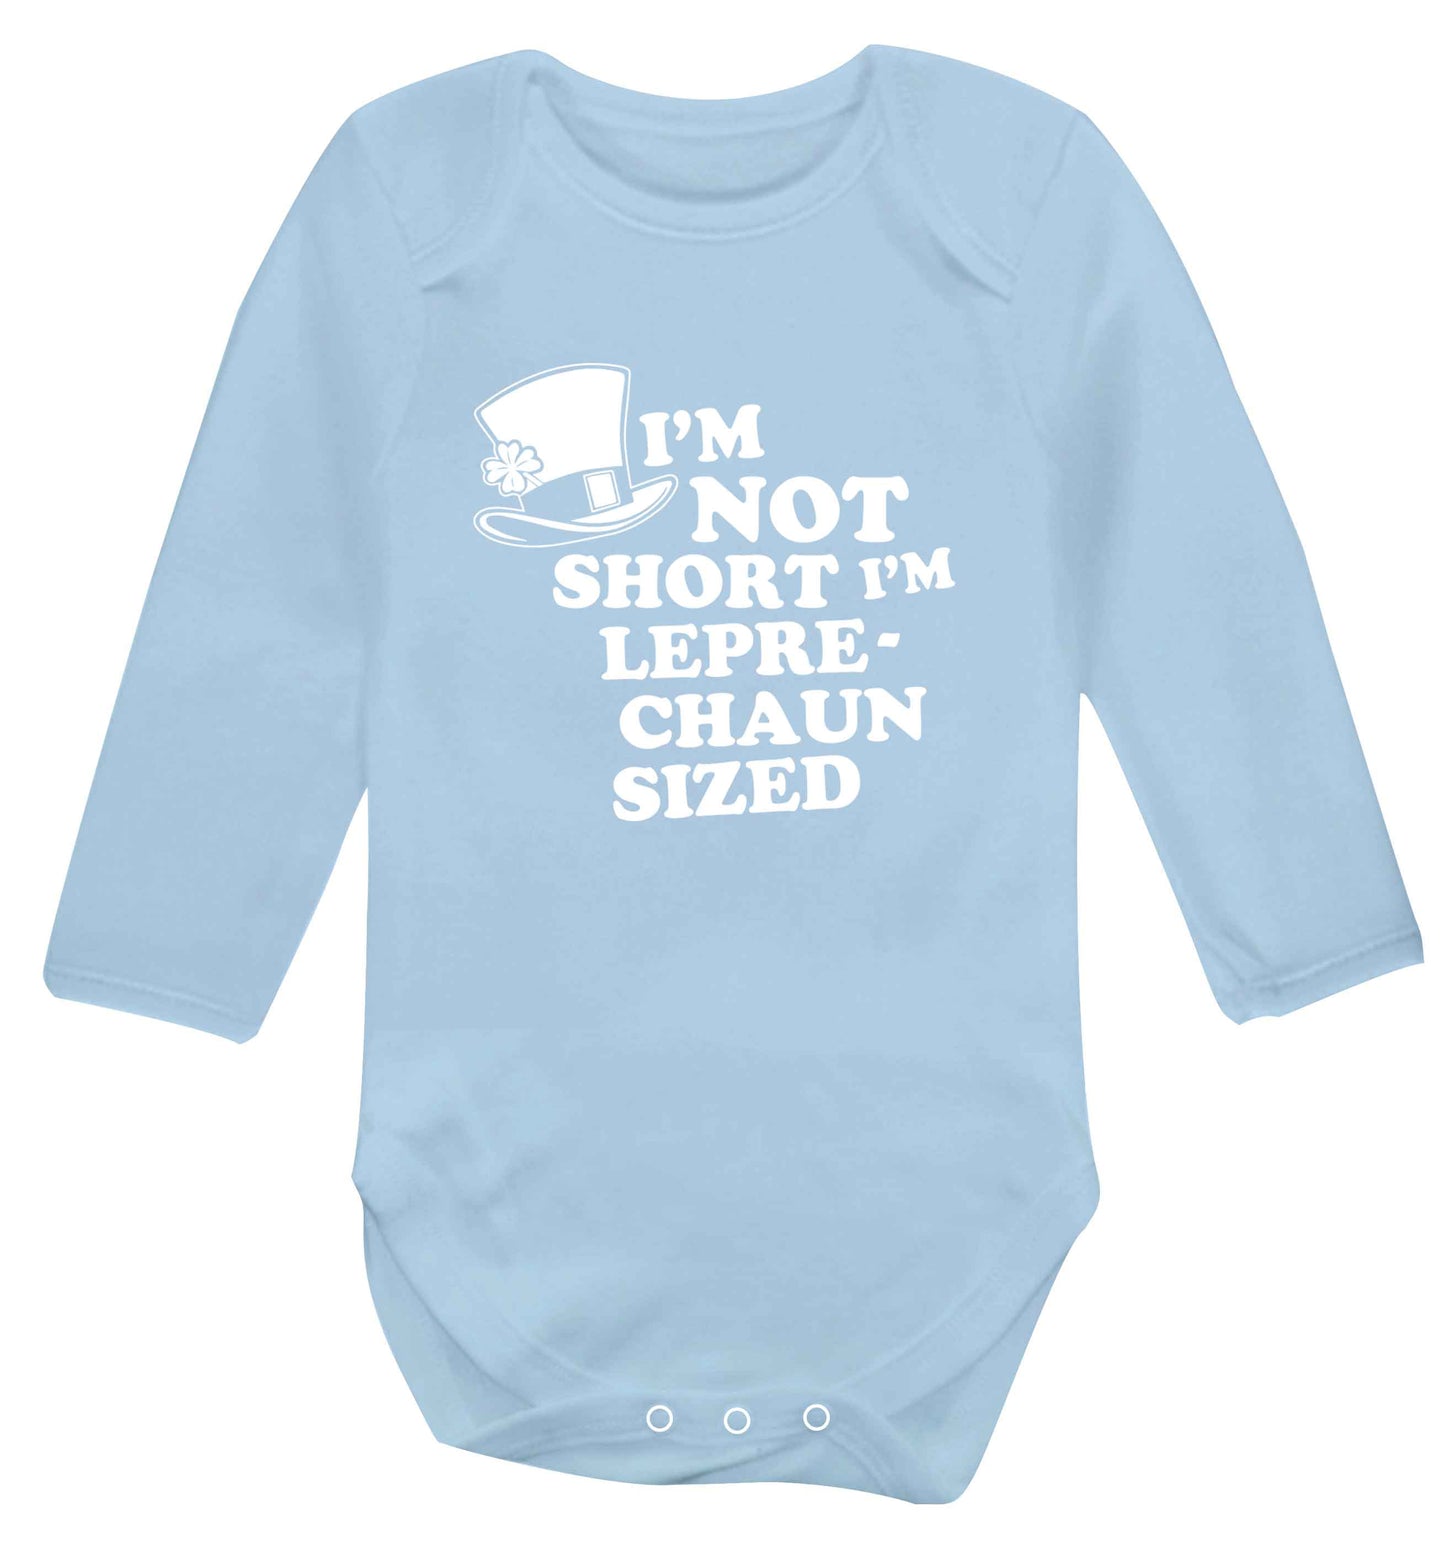 I'm not short I'm leprechaun sized baby vest long sleeved pale blue 6-12 months